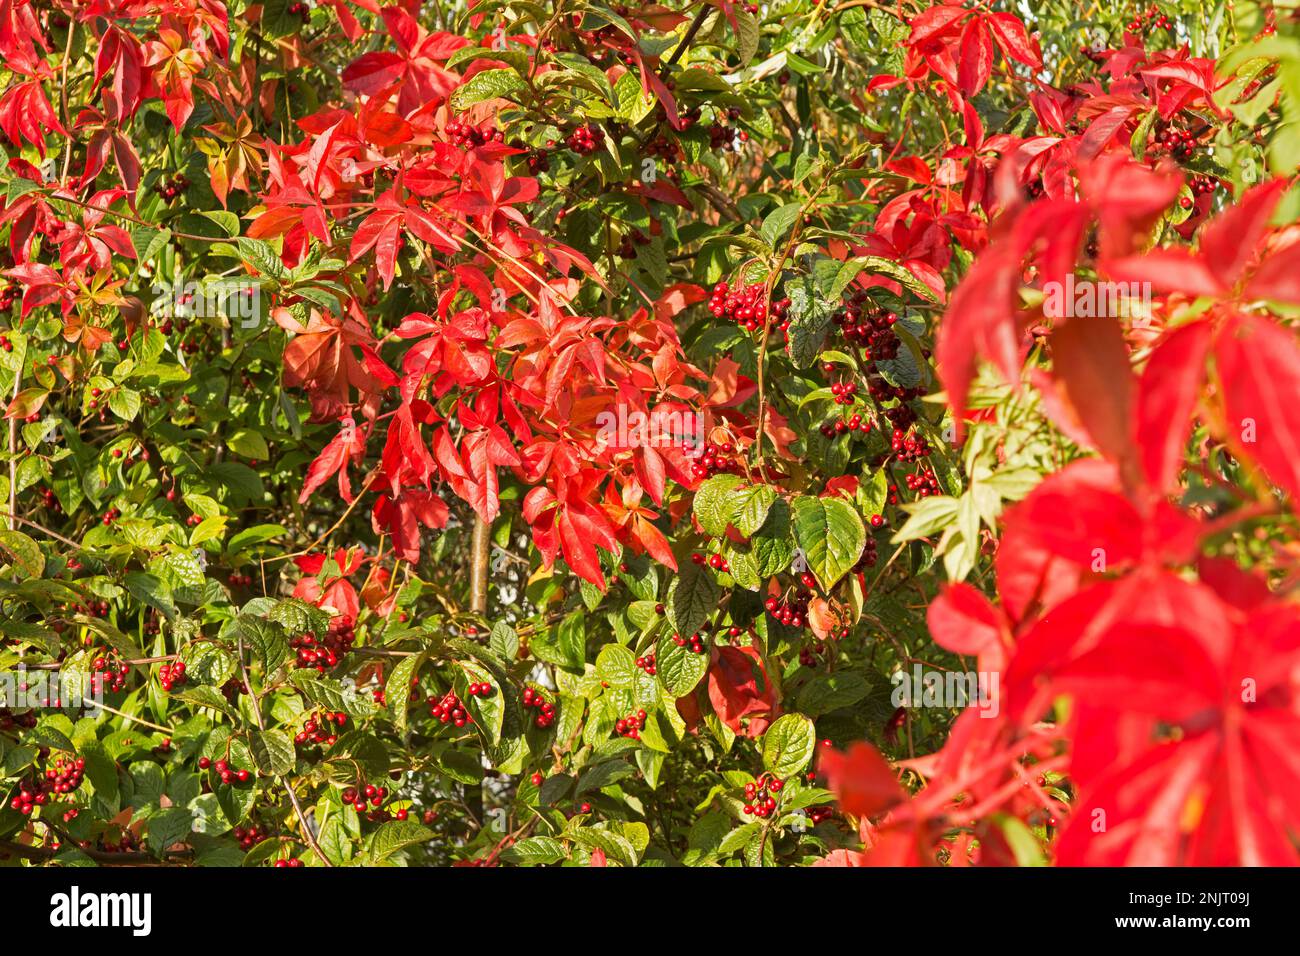 Cotoneaster bullatus shrub with red berries Stock Photo